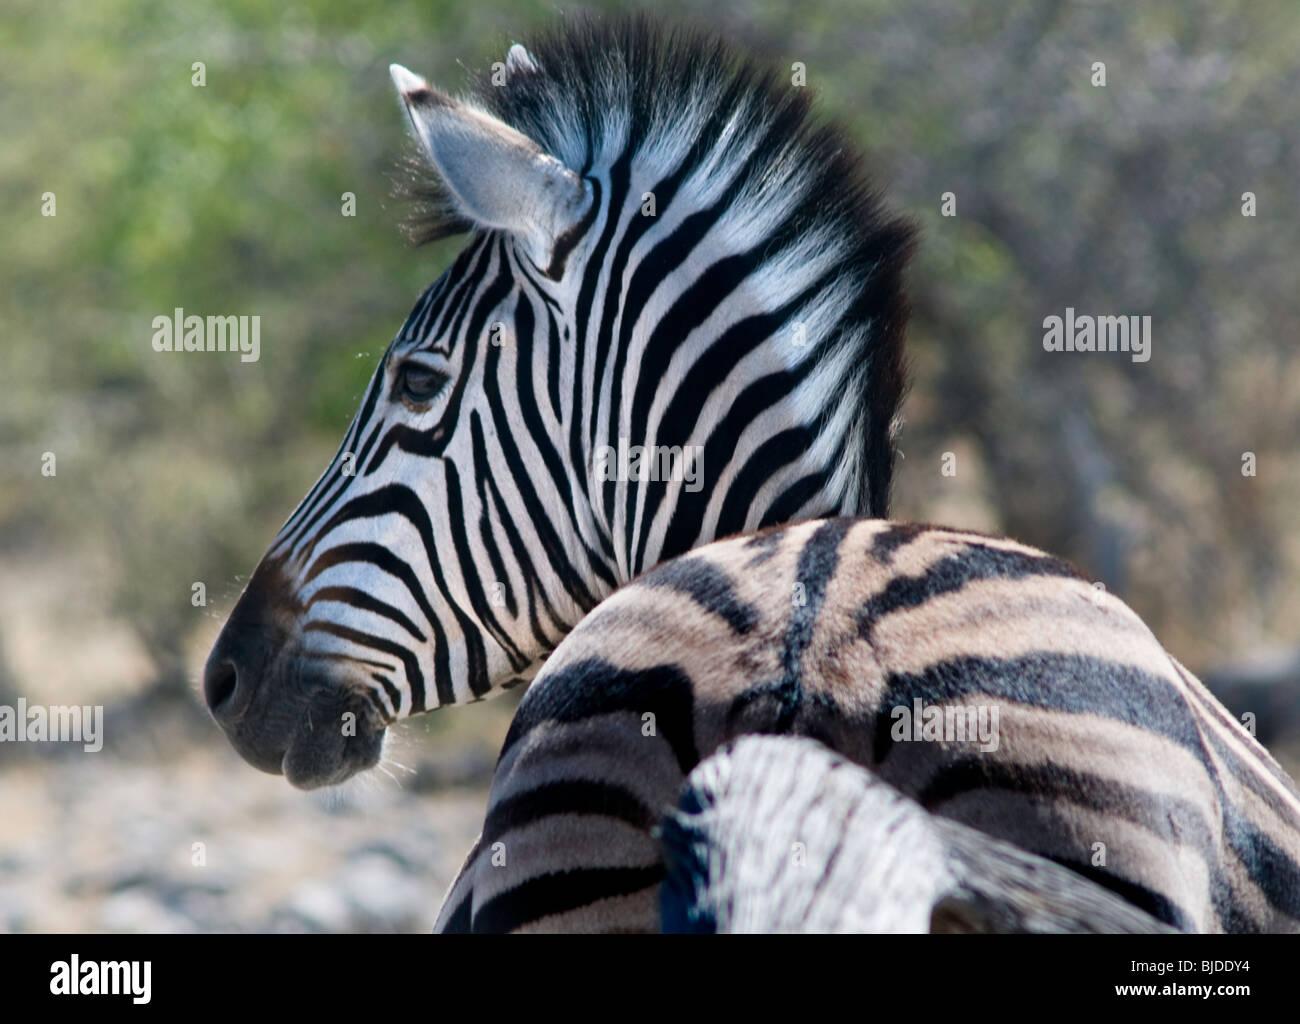 Zebra rear view Stock Photo